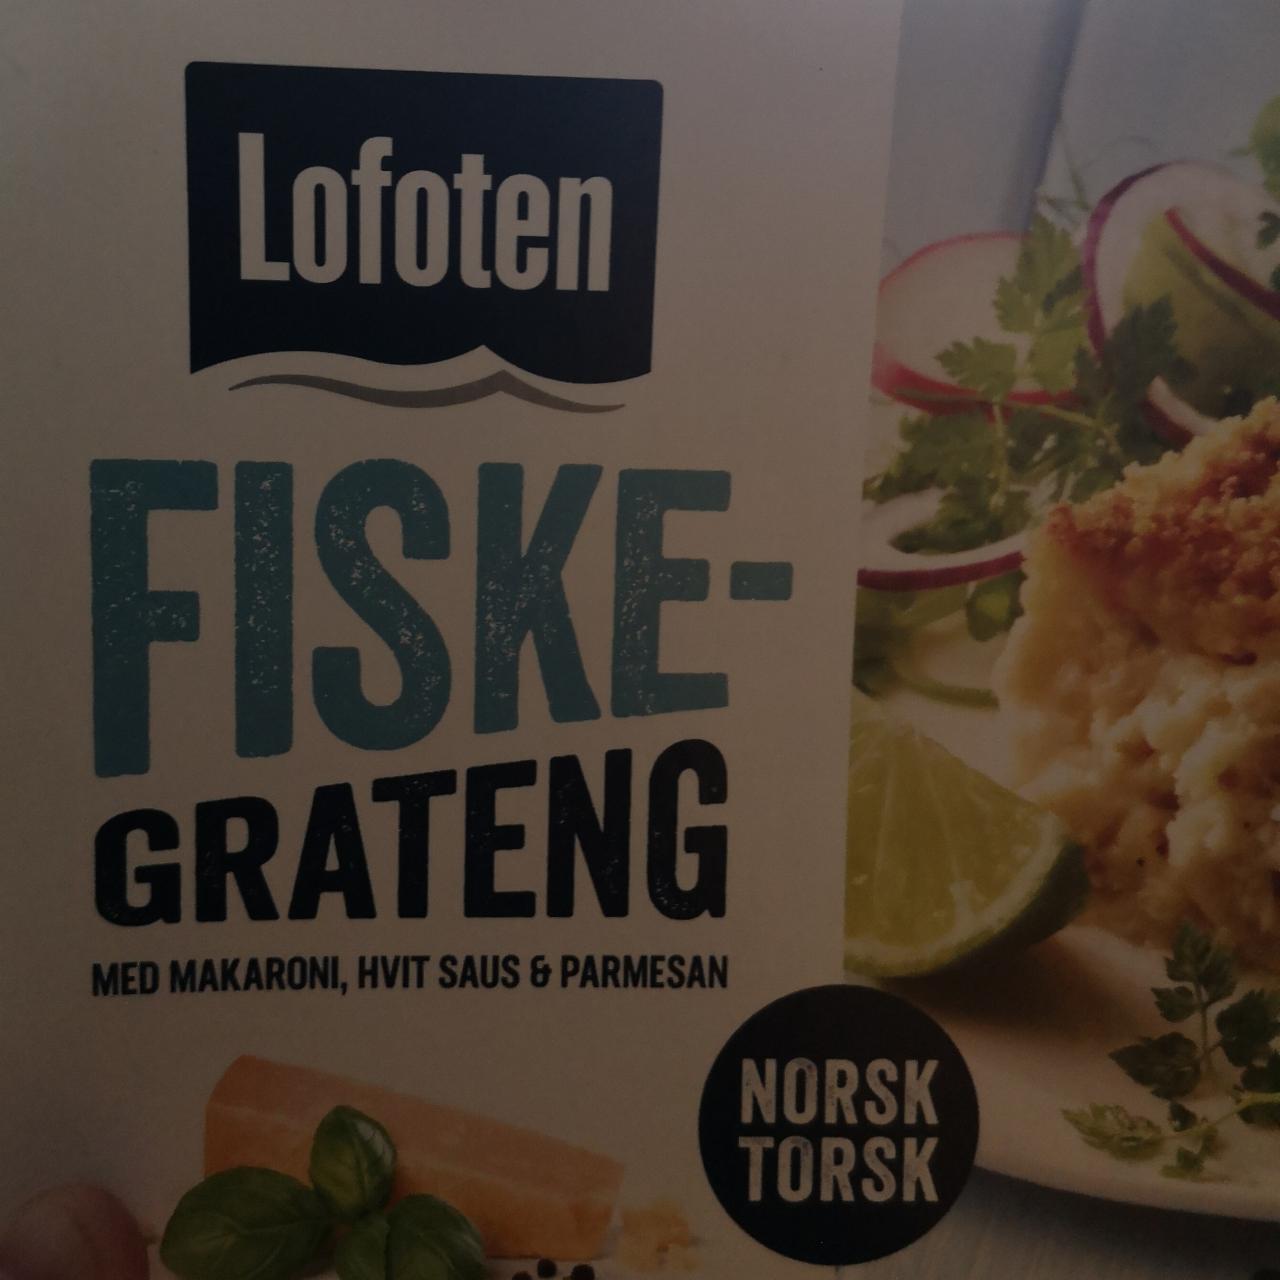 Fotografie - Fiskegrateng med makaroni, hvit saus & parmesan Lofoten